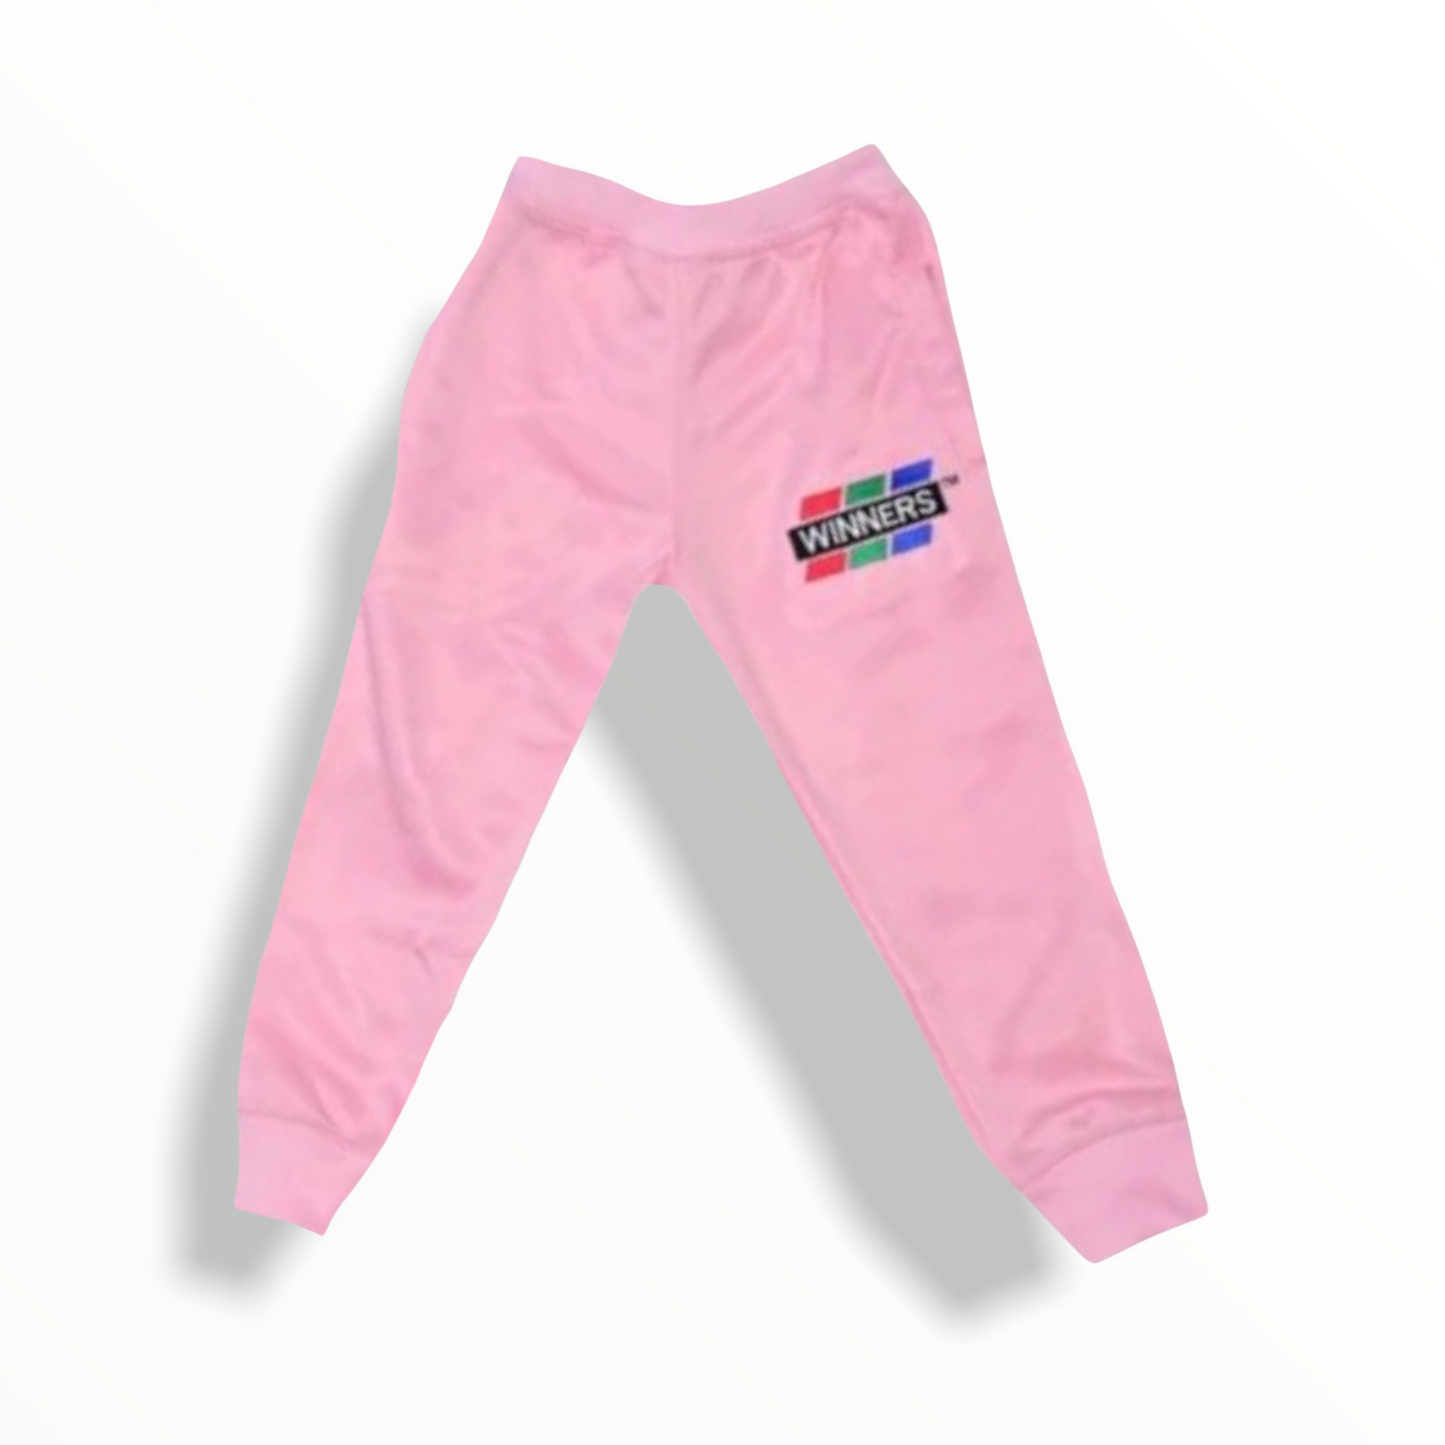 Winners Checkered Track Set Pants - Pink (Kid's)